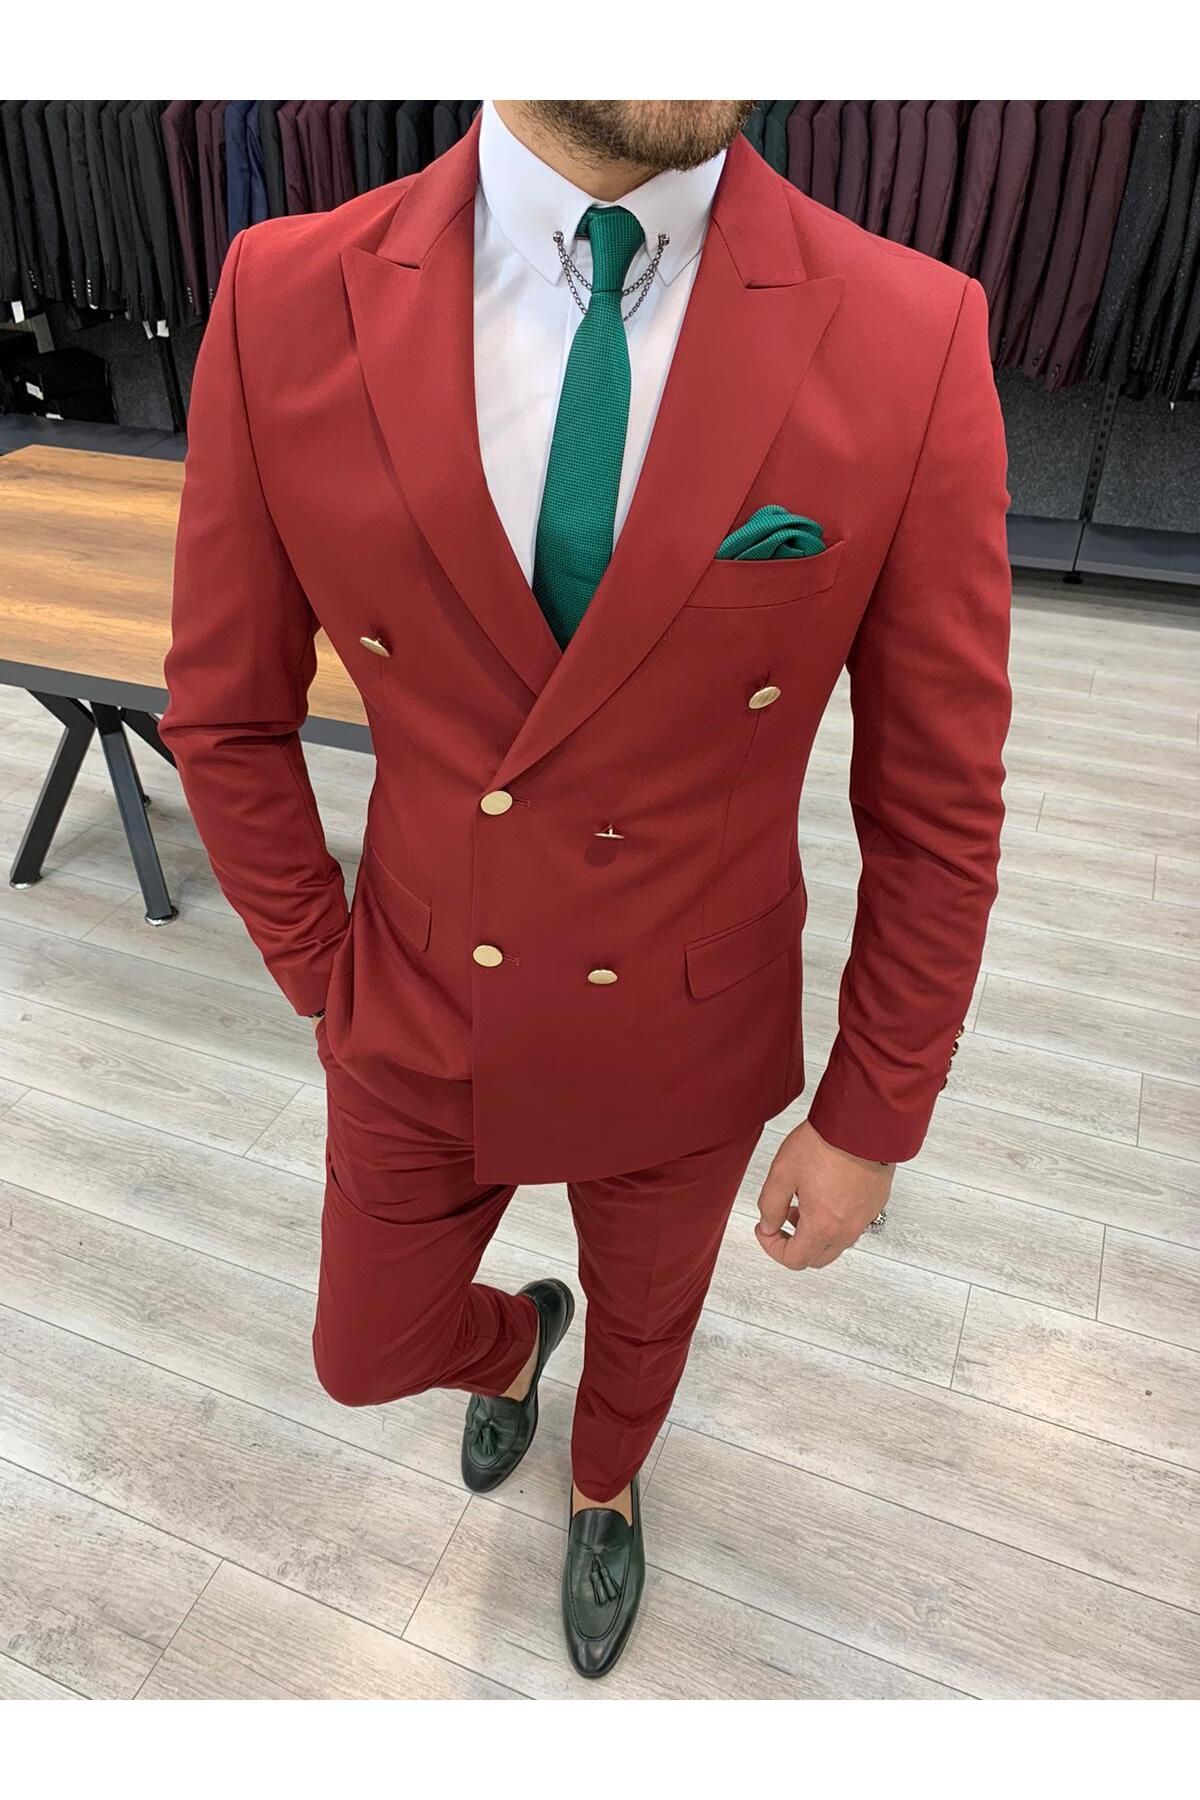 LONATOLİA Erkek Kruvaze Takım Elbise İtalyan Kesim Slim Fit Ceket Pantolon